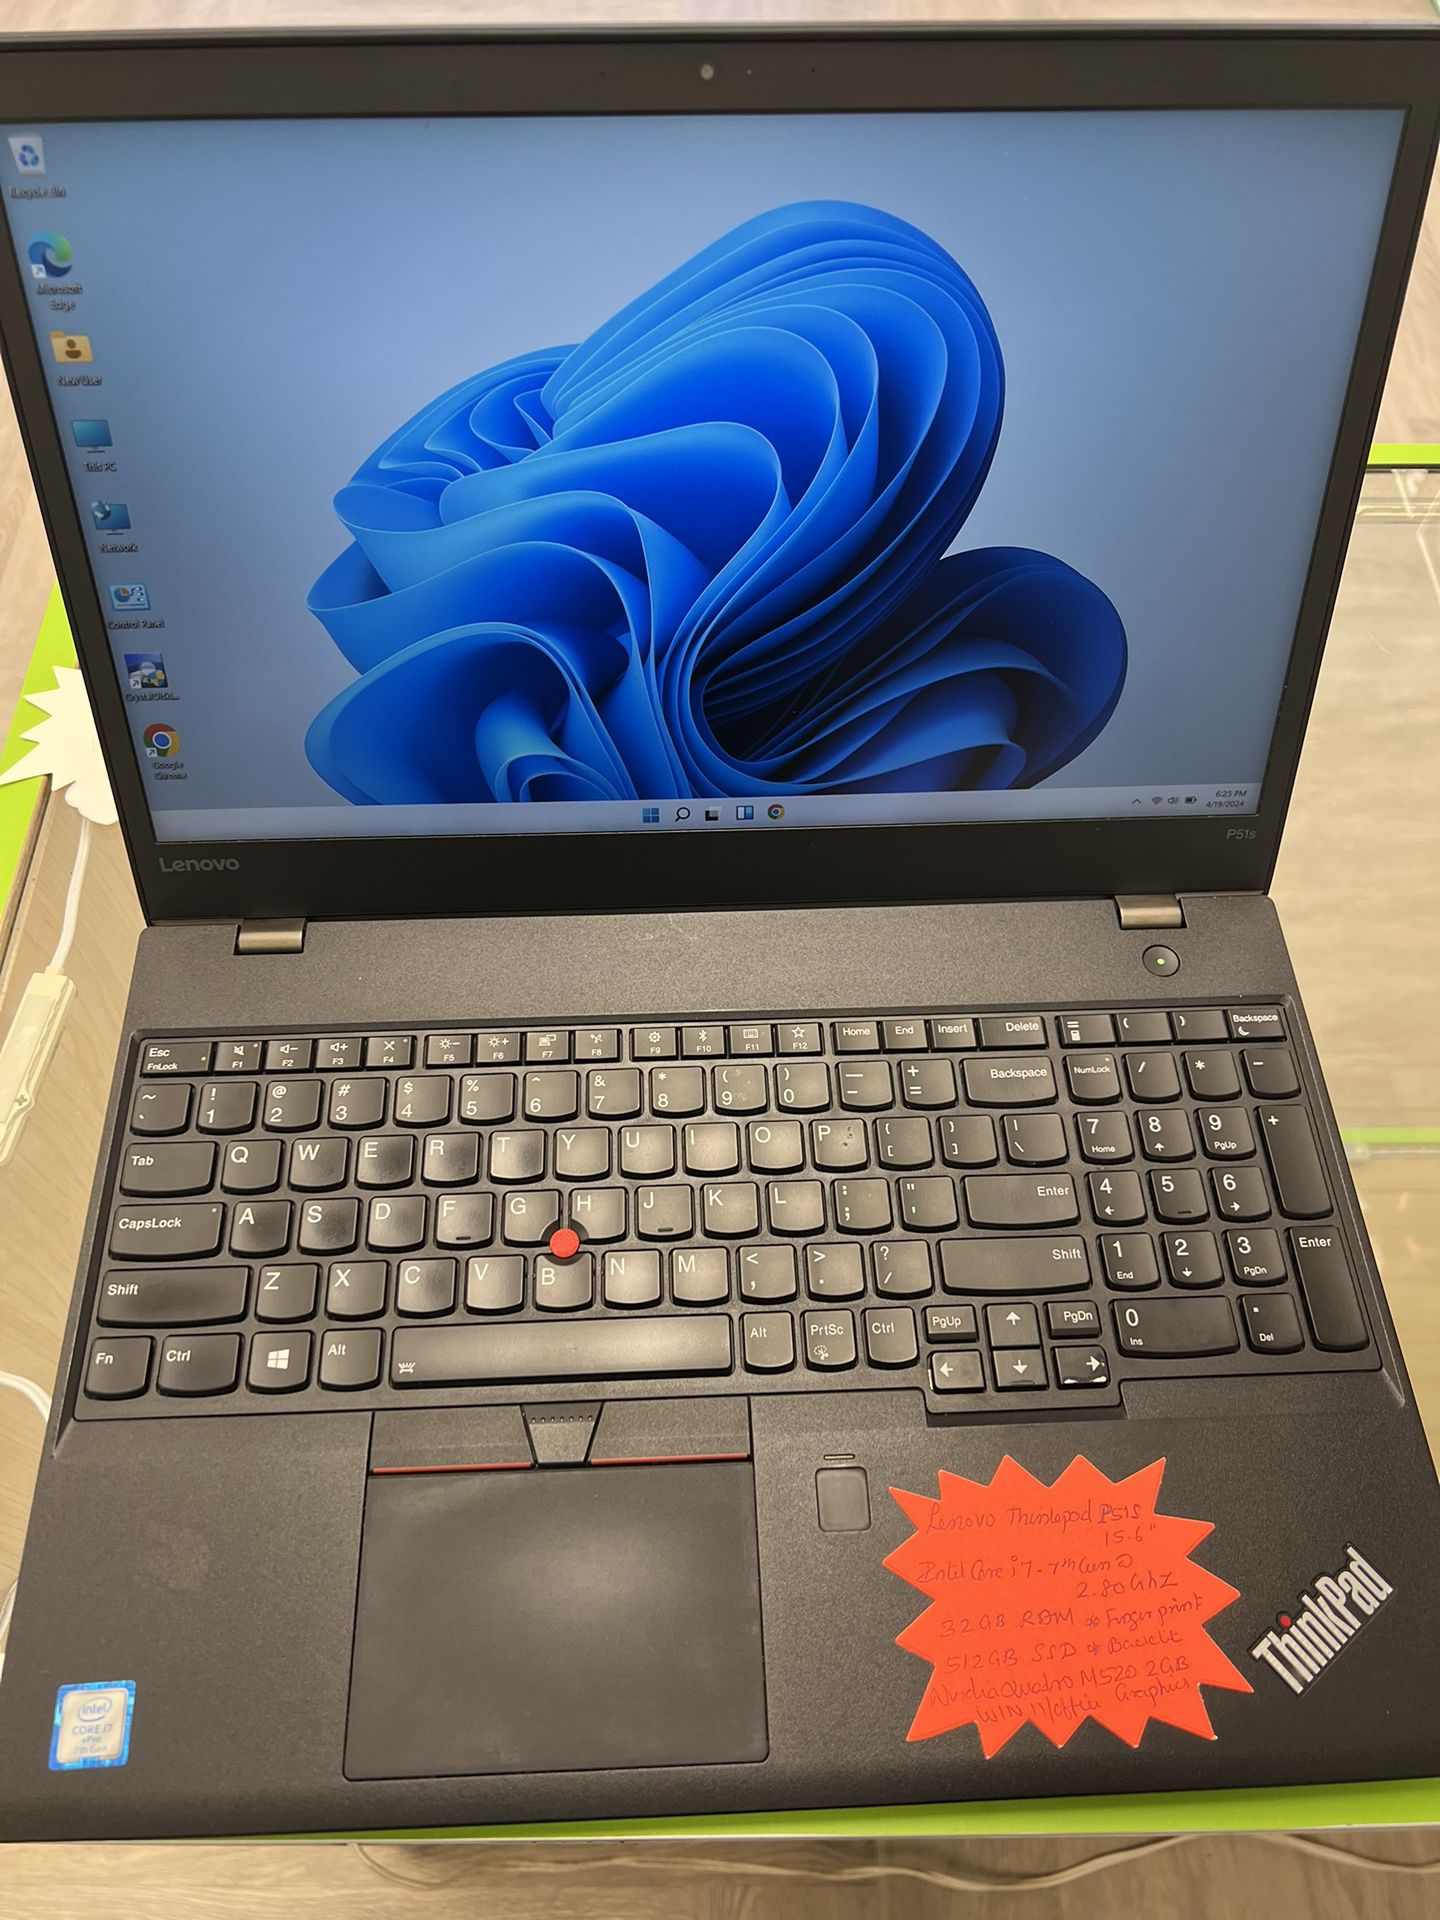 Lenovo ThinkPad P51s Laptop i7-7600U 32GB Ram 512GB SSD Quadro M520 2GB Win 10 IoT Enterprise (Exactly similar to Windows 11) . Freshly installed Wind